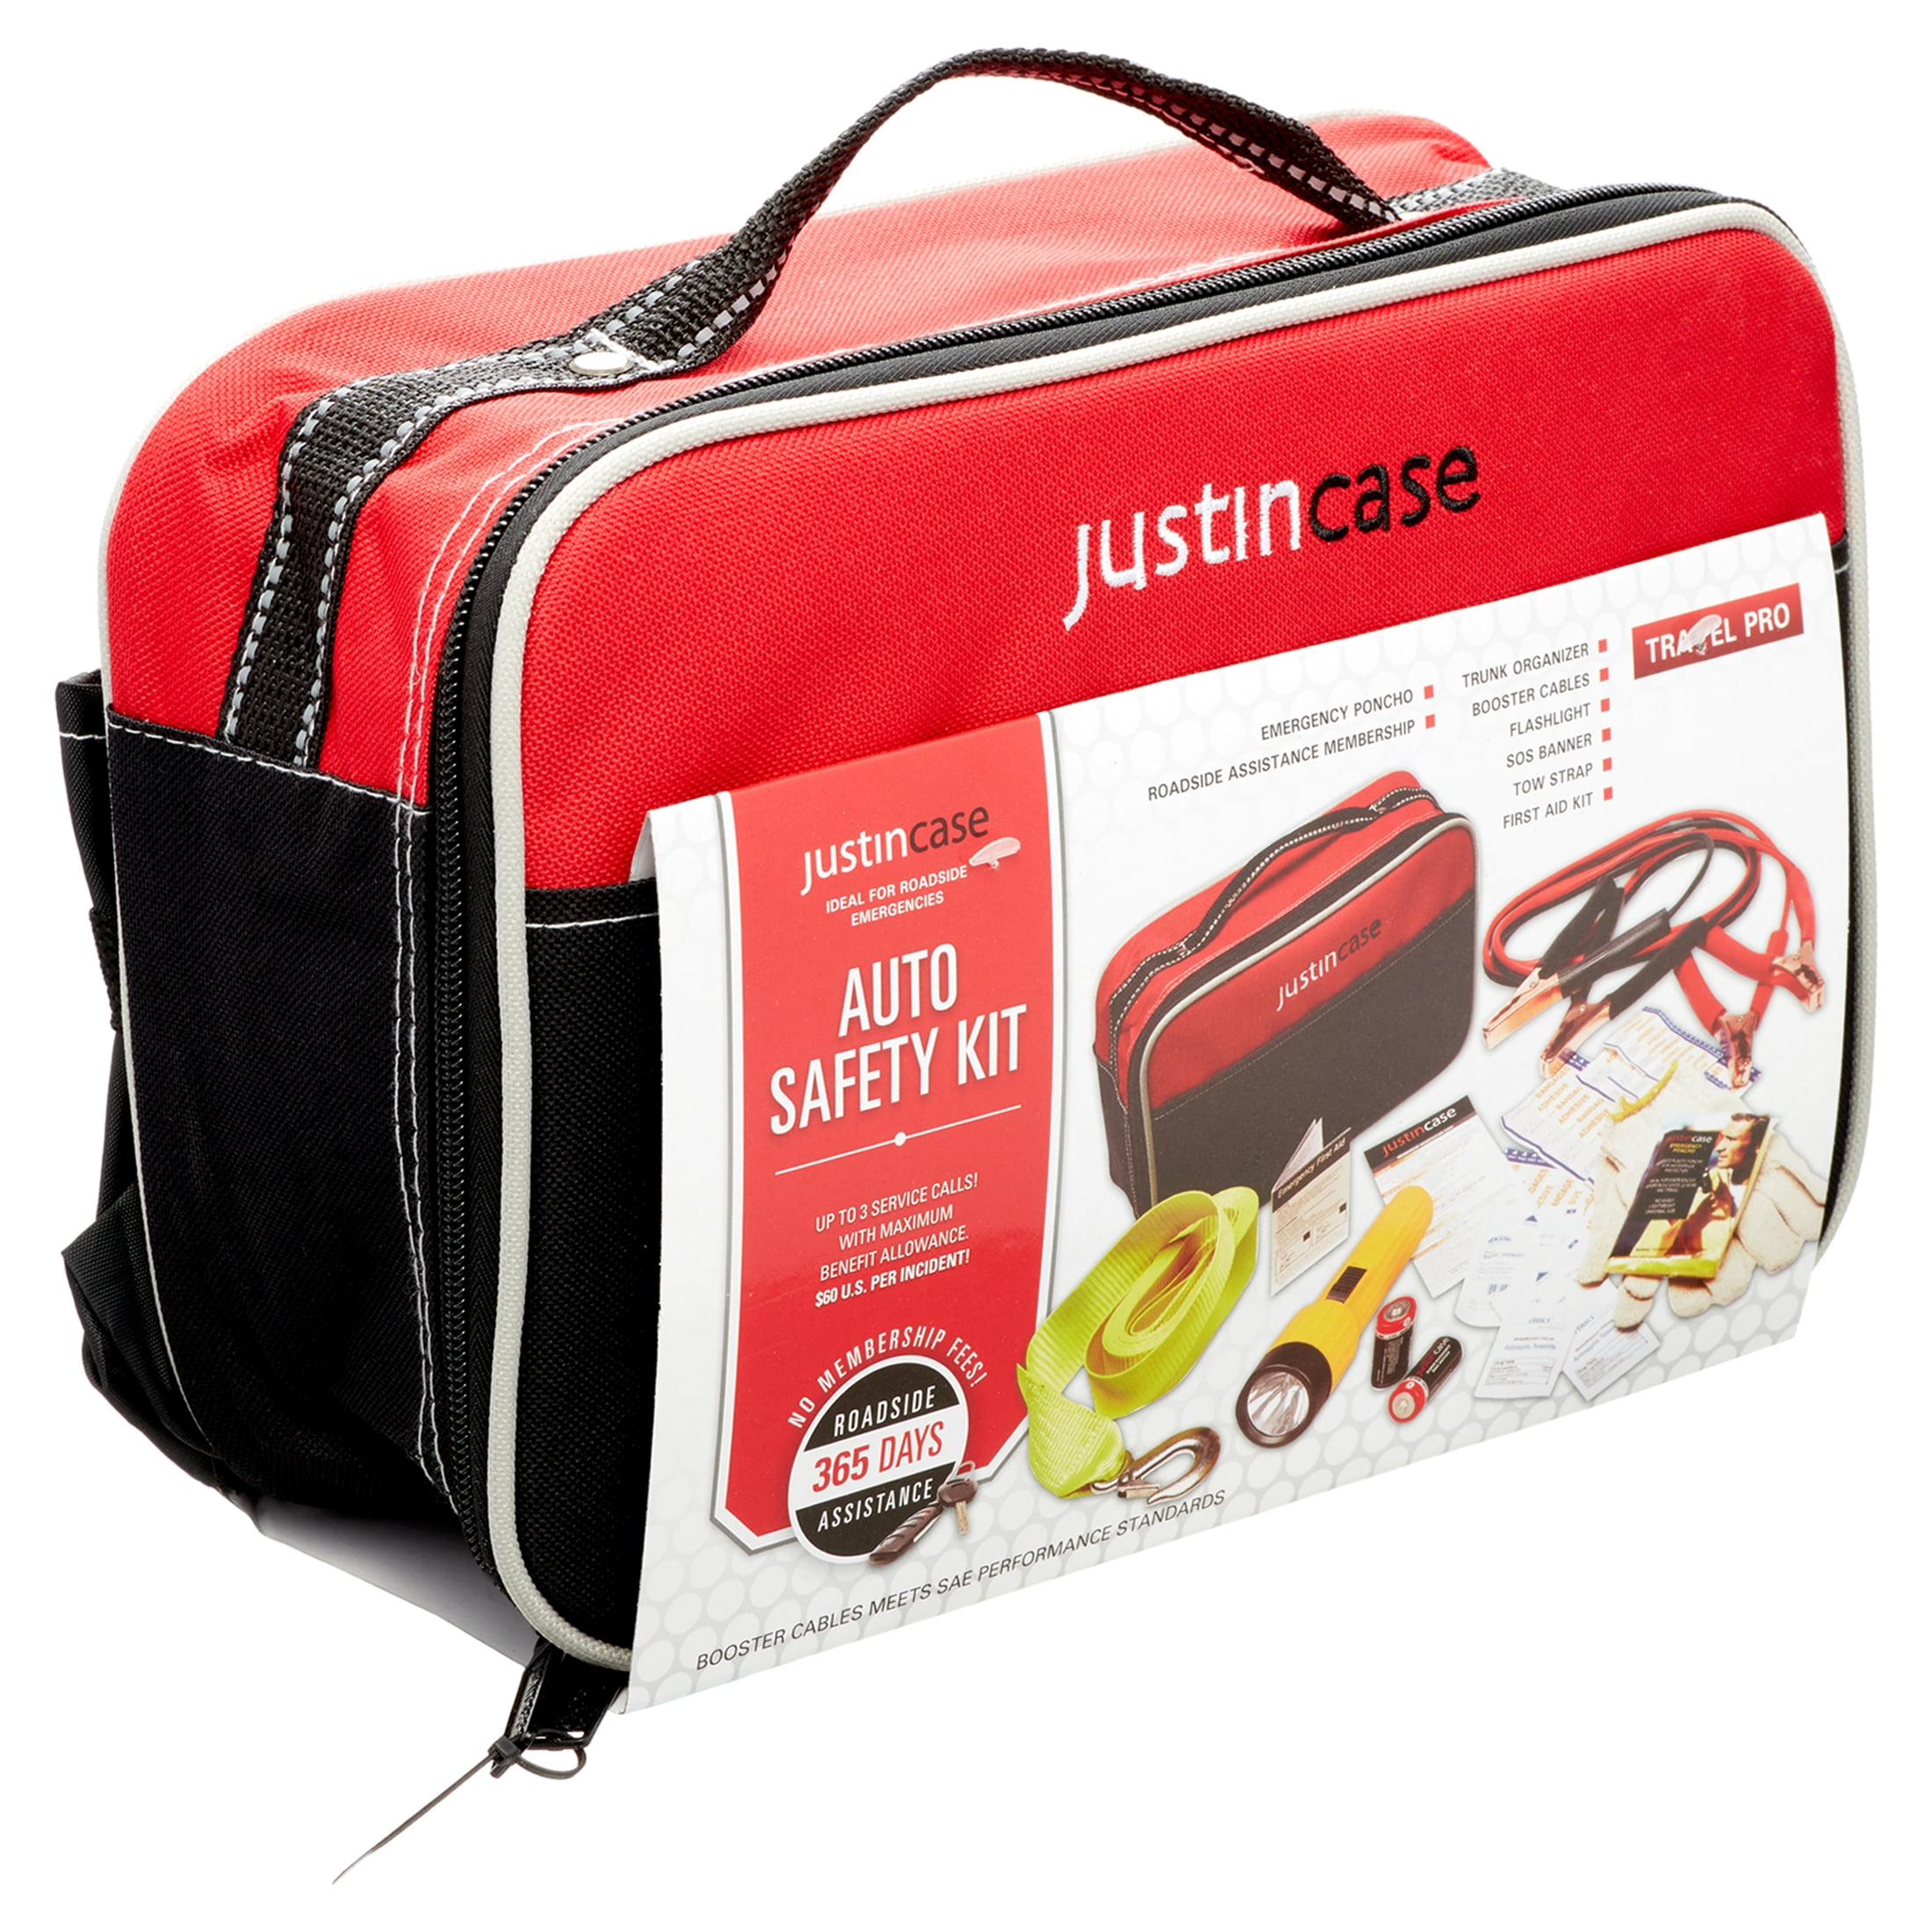 Justincase Travel Pro Auto Safety Kit